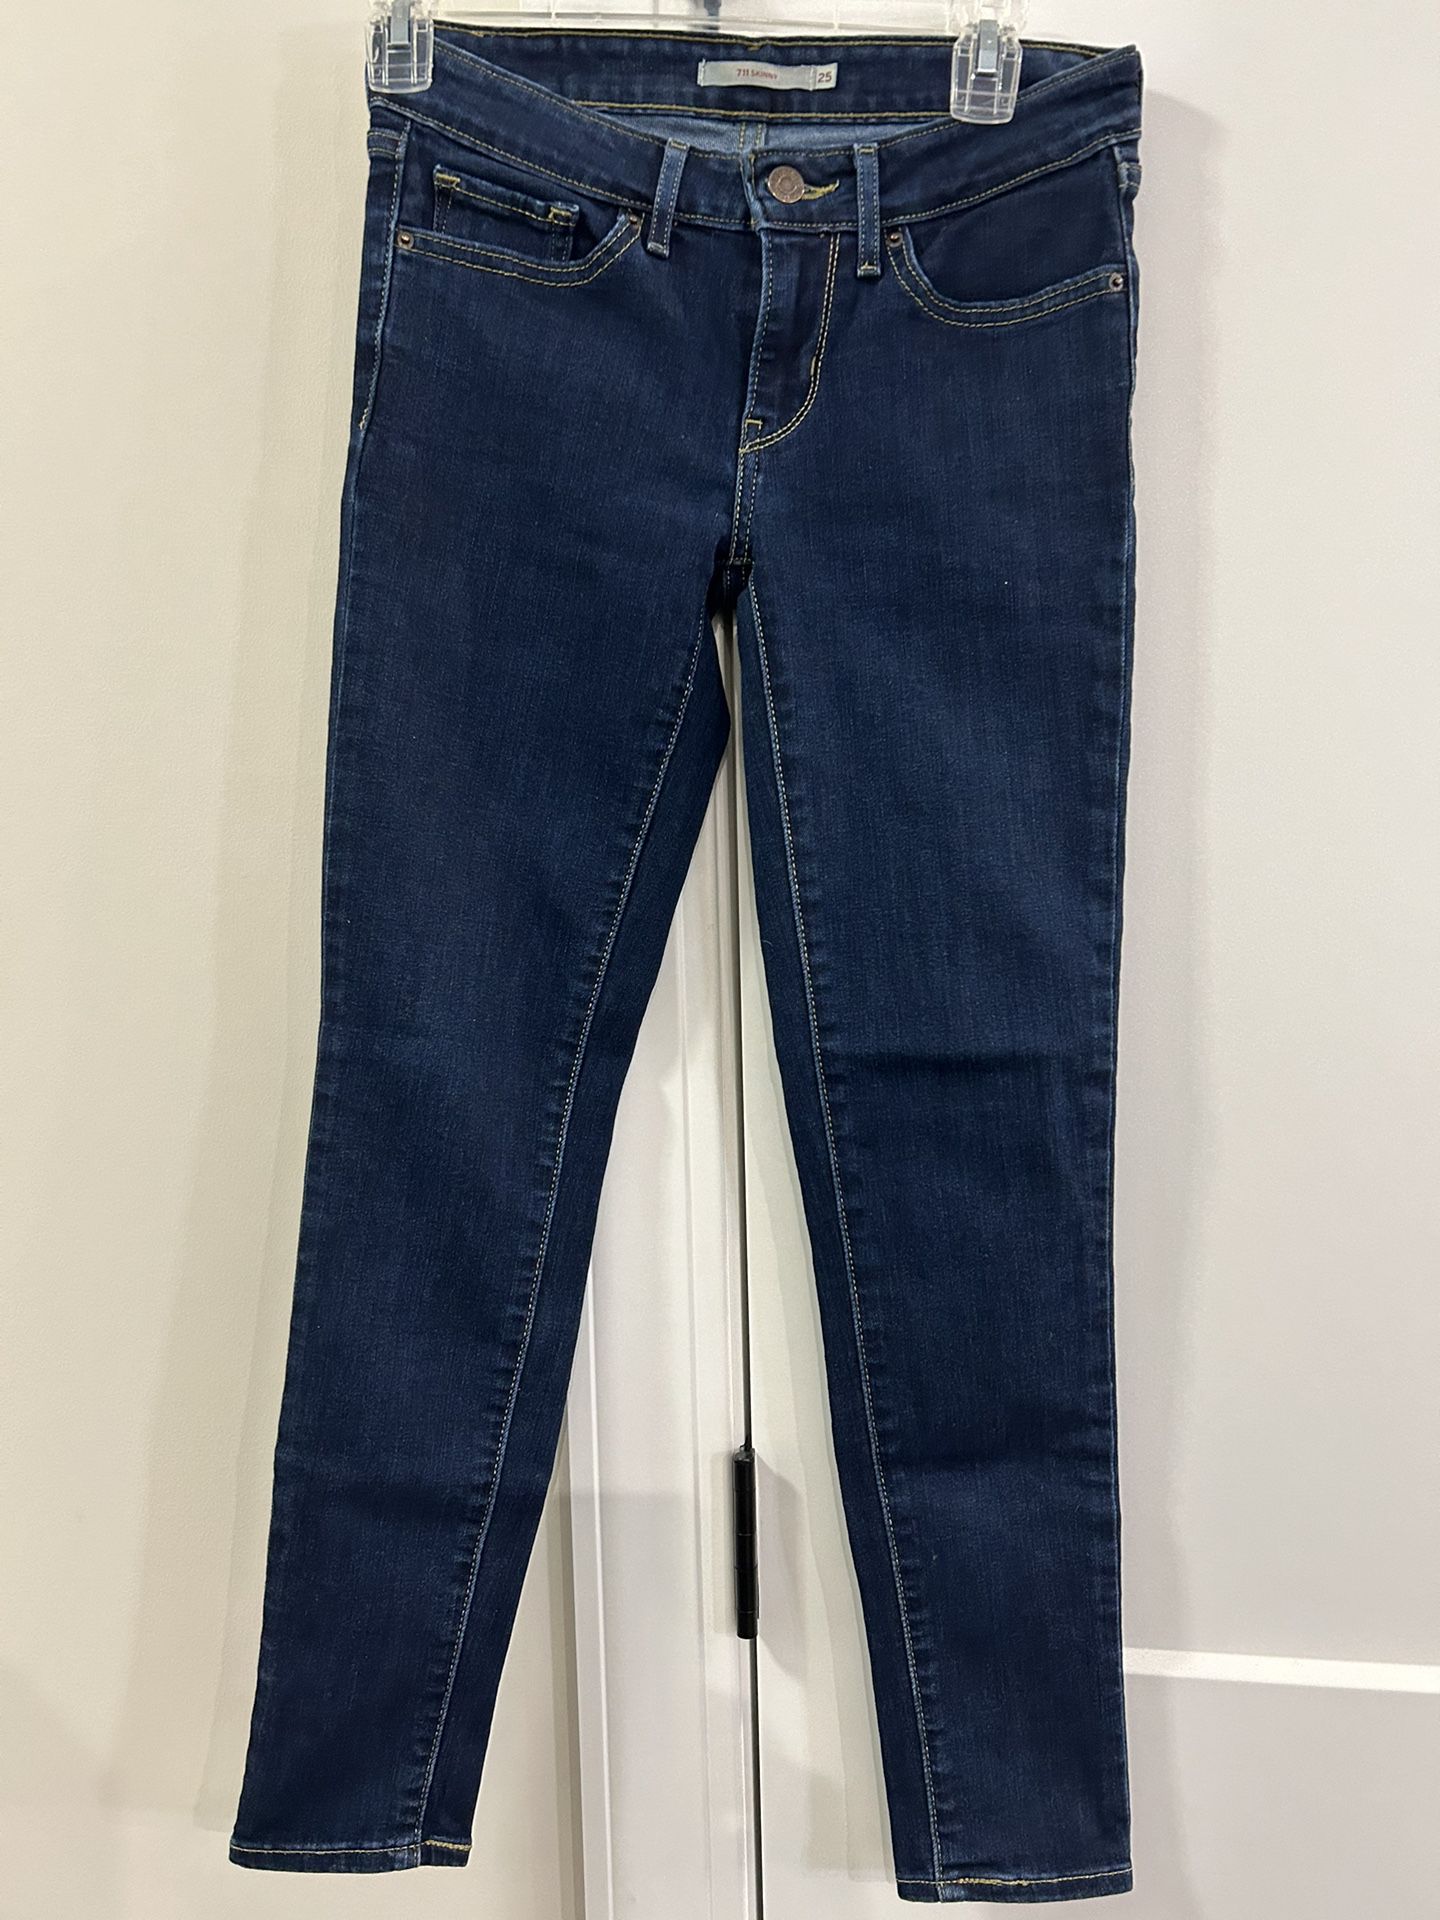 Women Levi’s 711 Skinny Stretch Jeans in Size 25 Short Length.